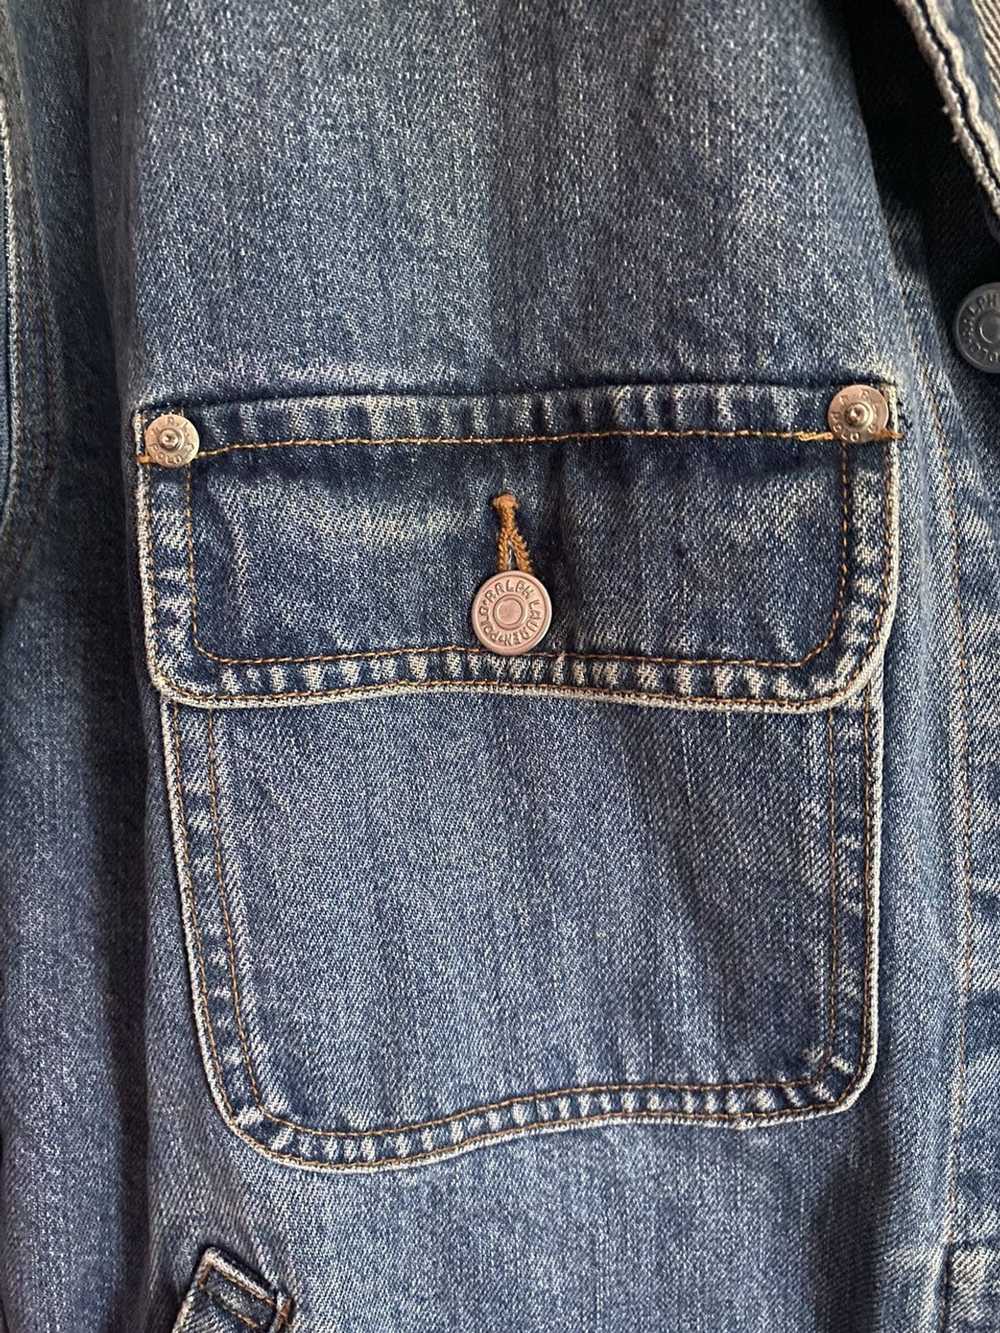 Polo Ralph Lauren Vintage Denim Jacket - image 5